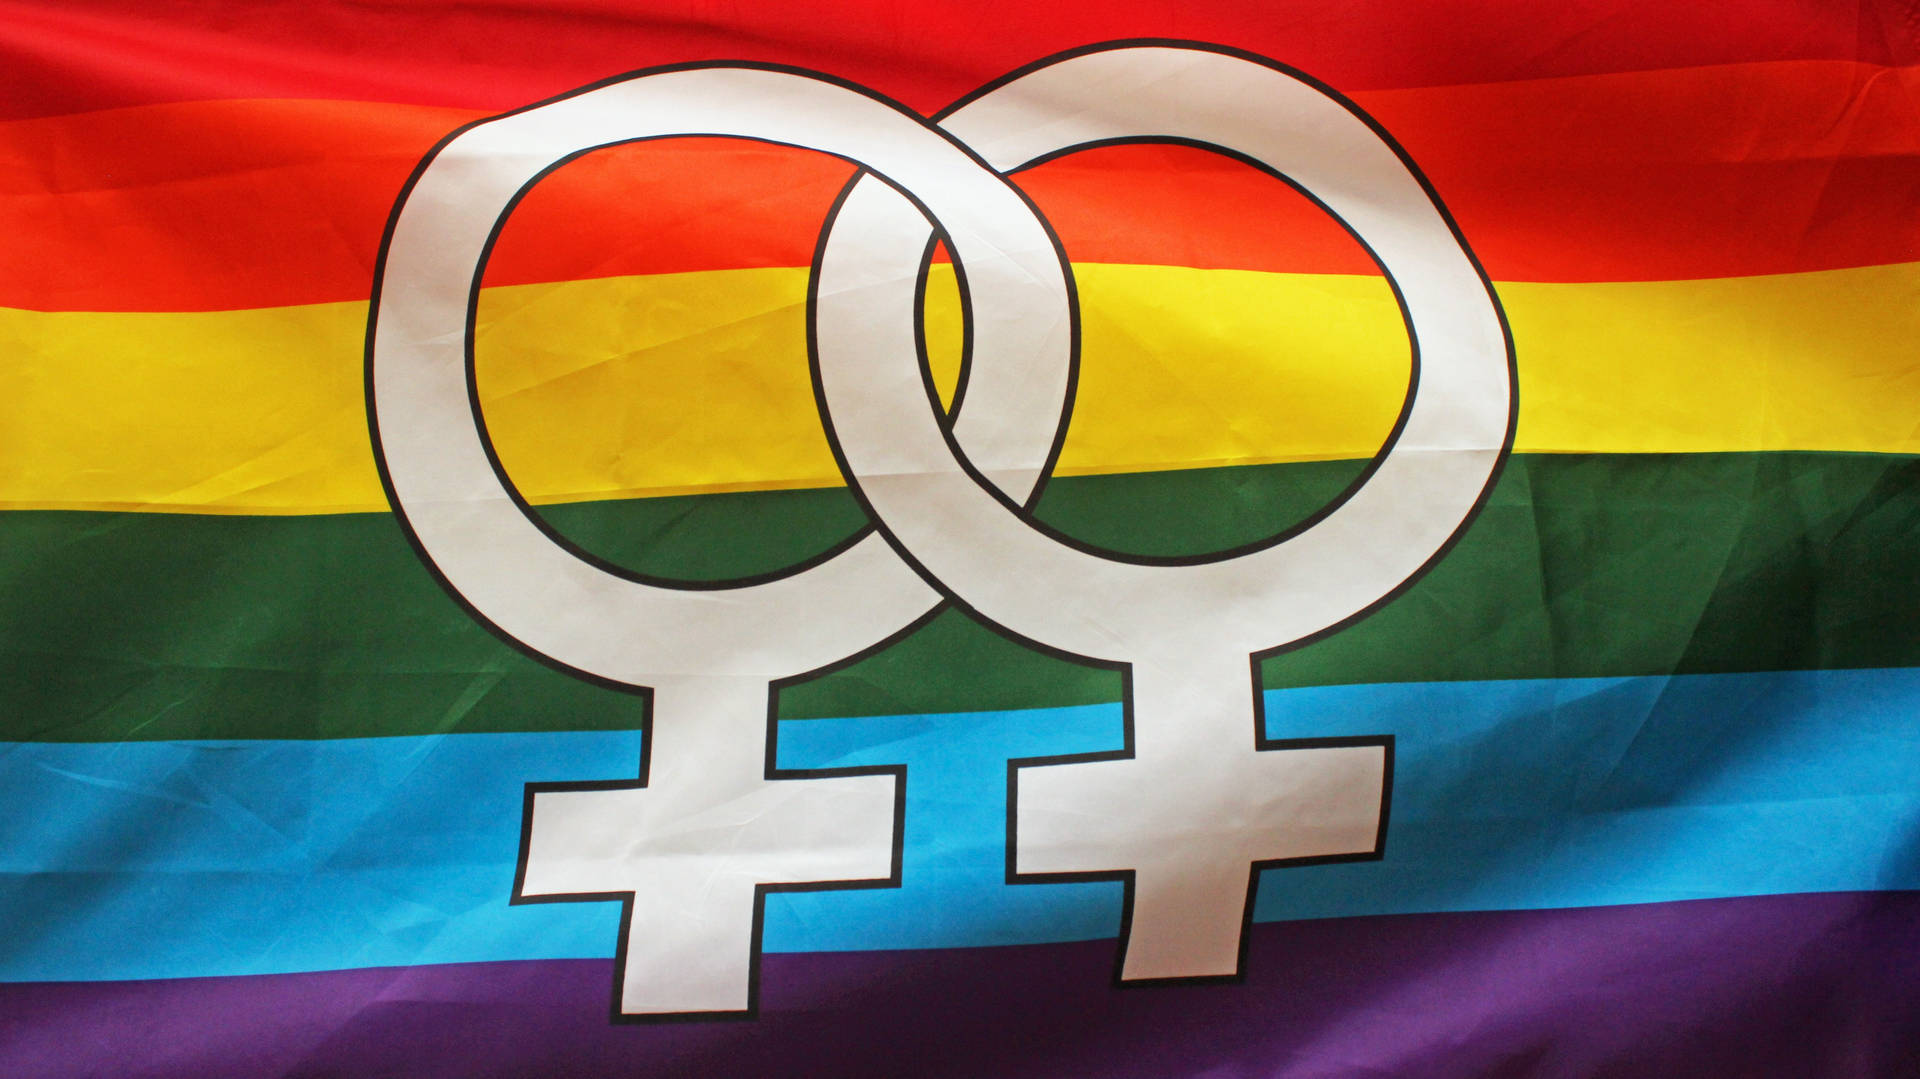 Caption: Vibrant Display Of The Pride Flag Symbolizing Lesbian Unity